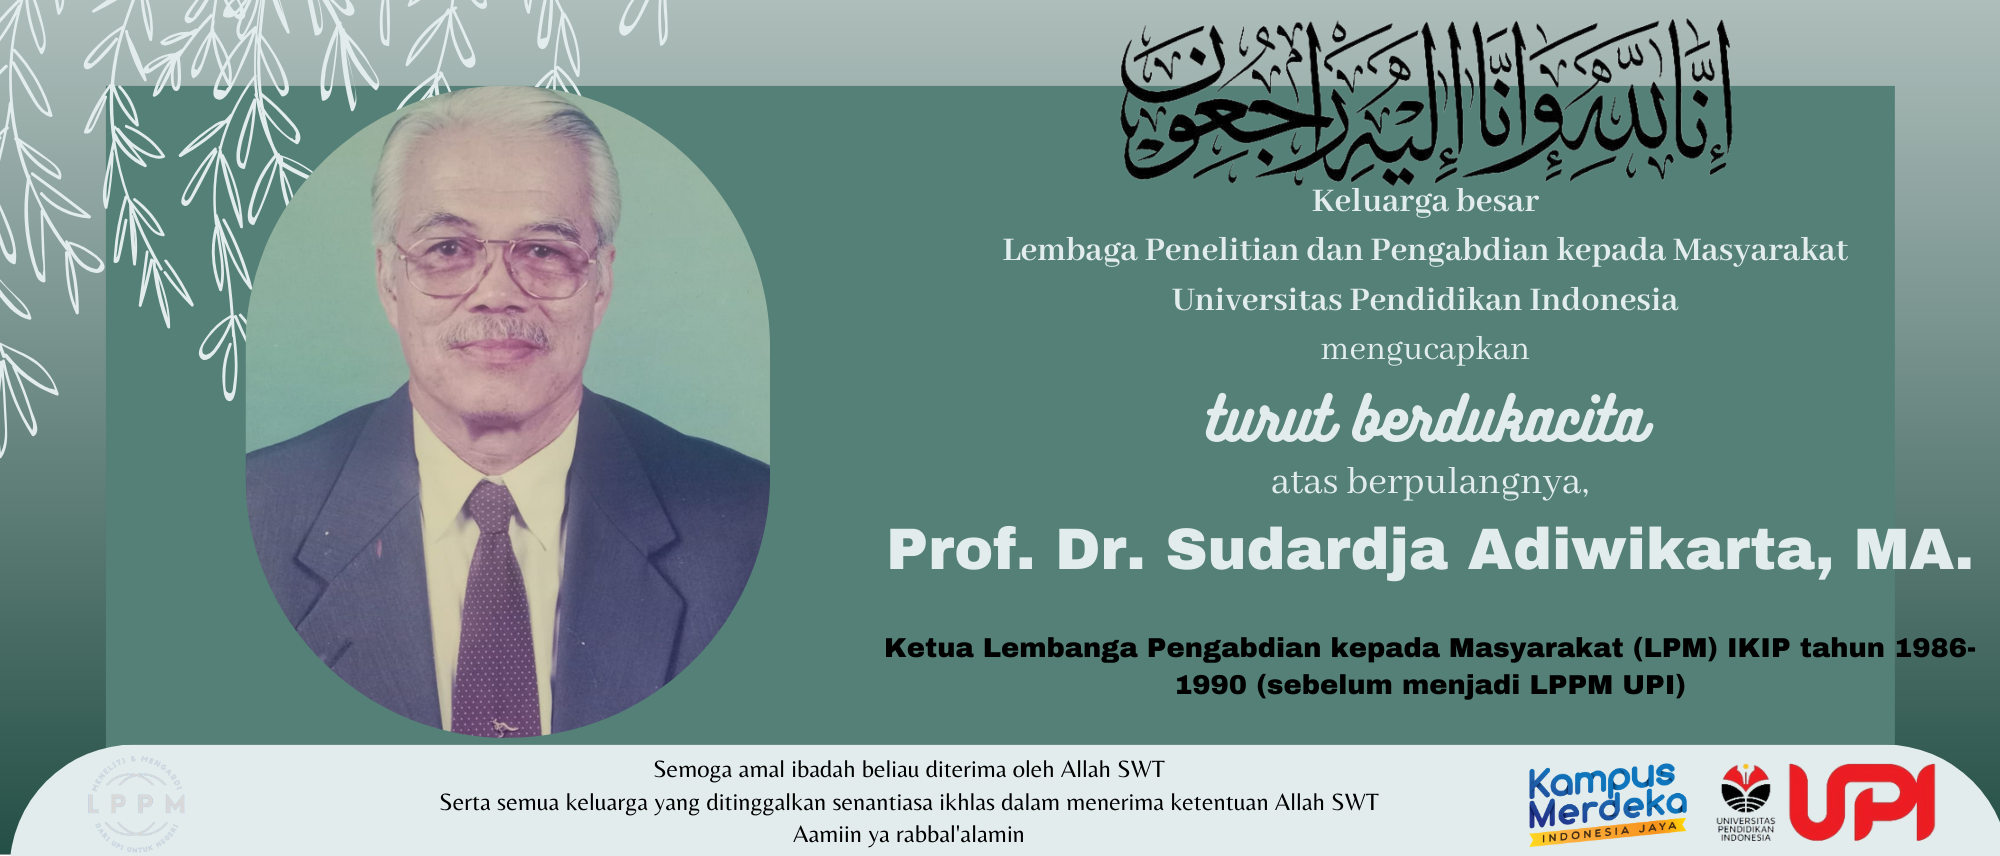 Berita Duka Prof. Dr. Sudardja Adiwikarta, MA.